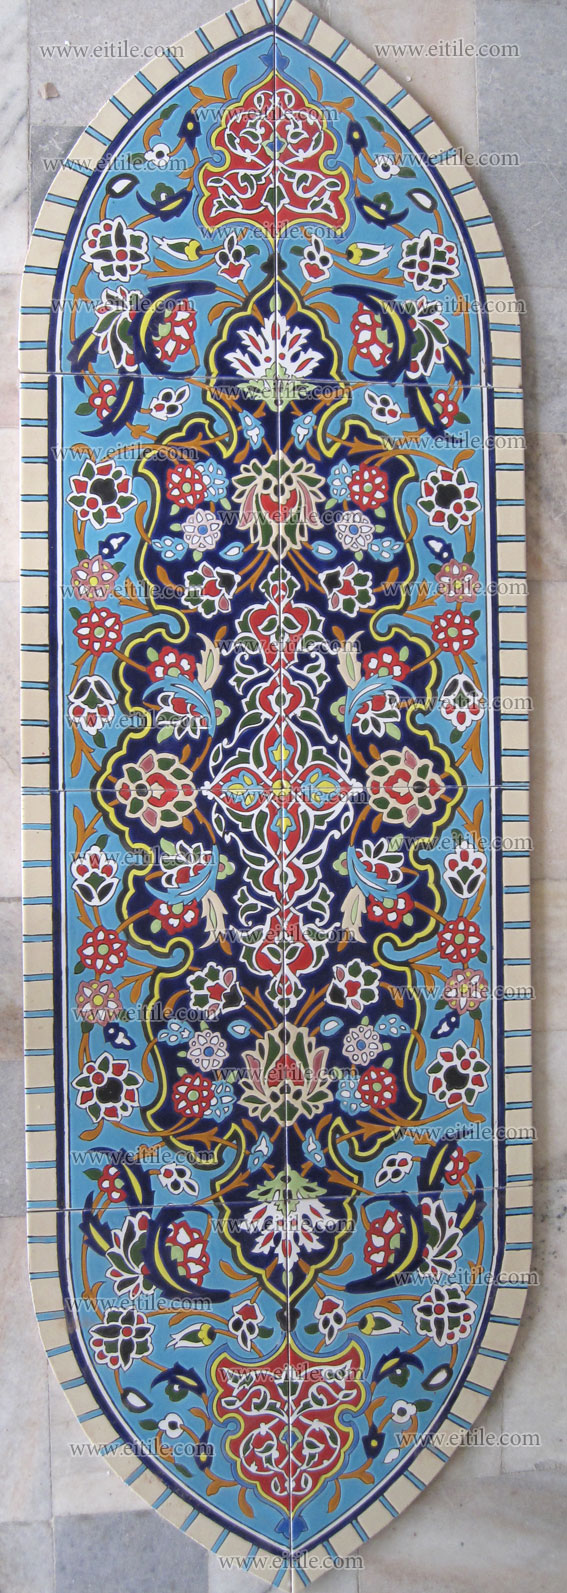 7 color ceramic tile, haftrang ceramic tile, hand painted ceramic tile, eitile.com